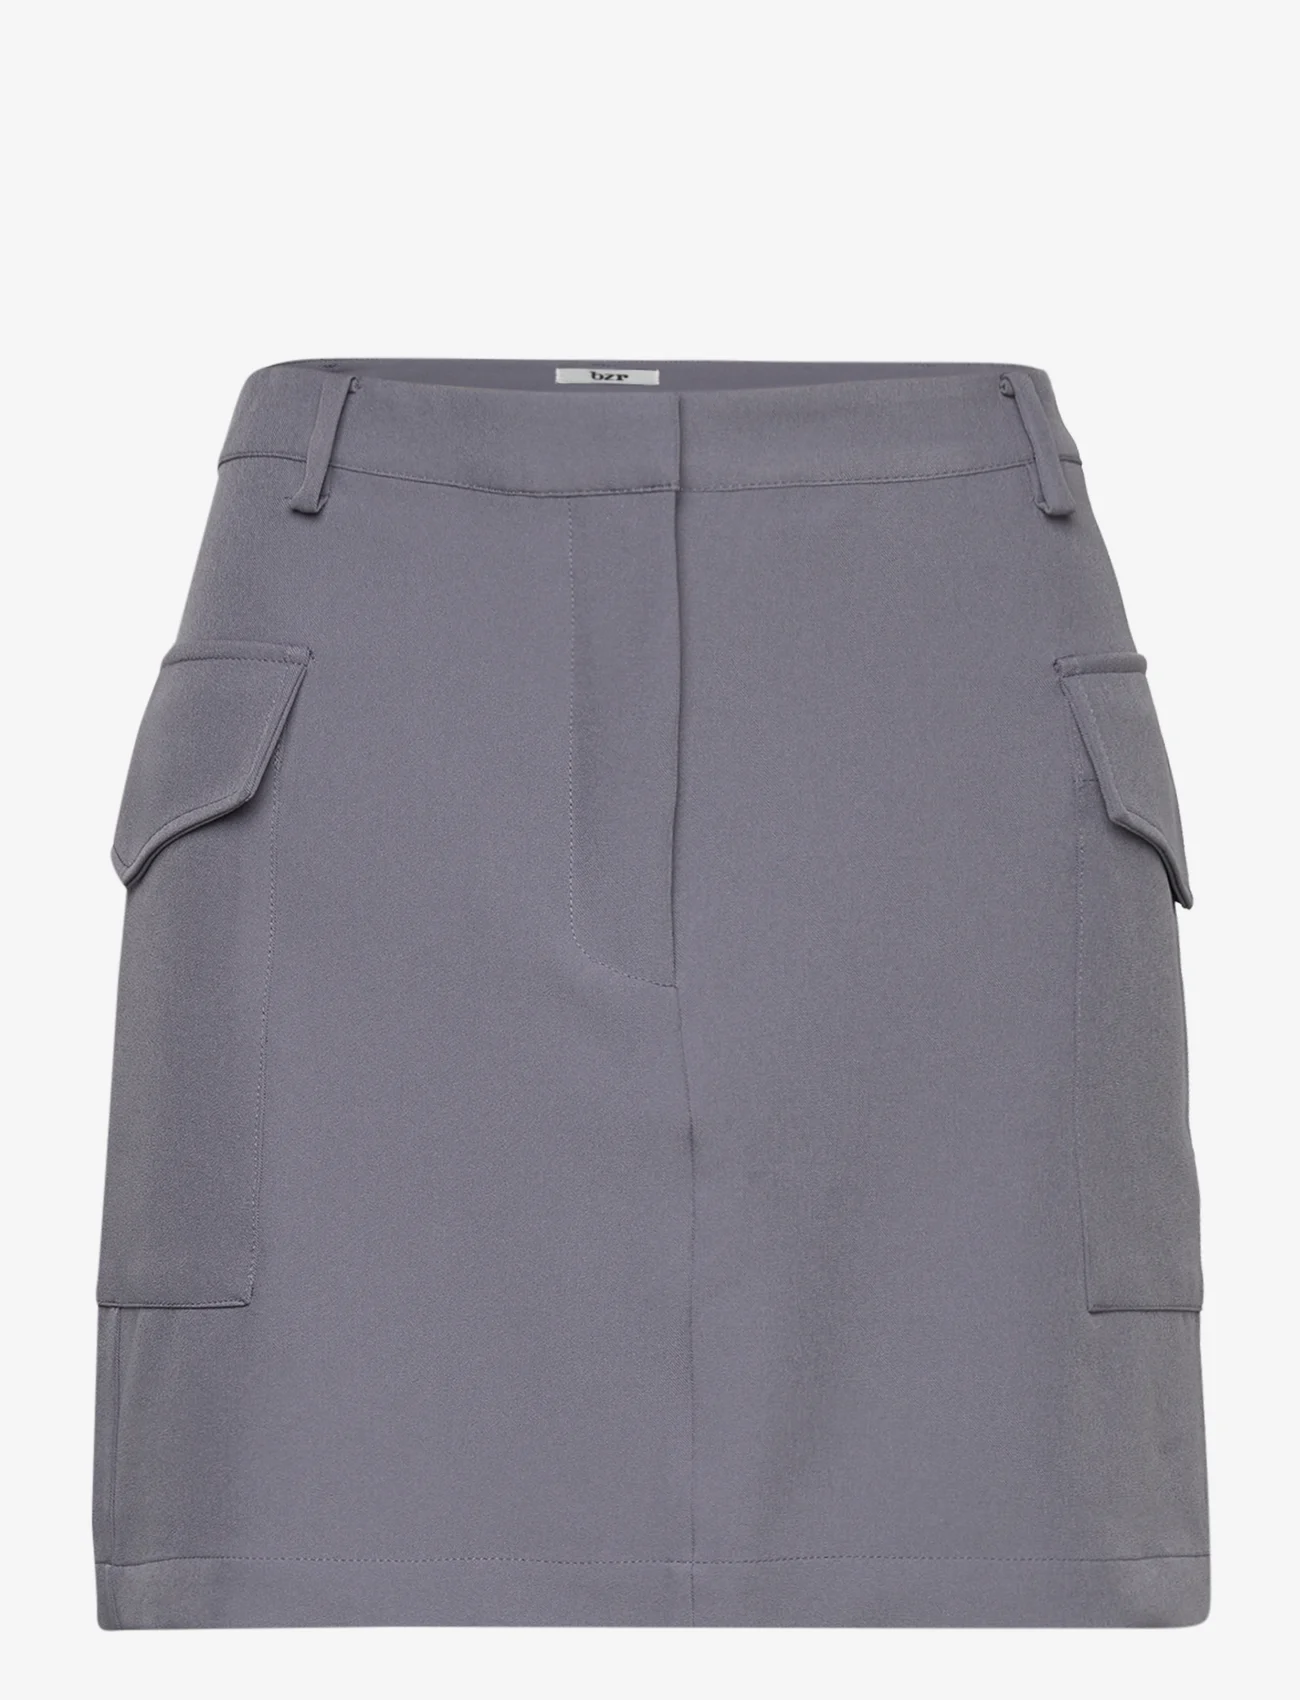 bzr - VibeBZCargo miniskirt - korte nederdele - grey - 0